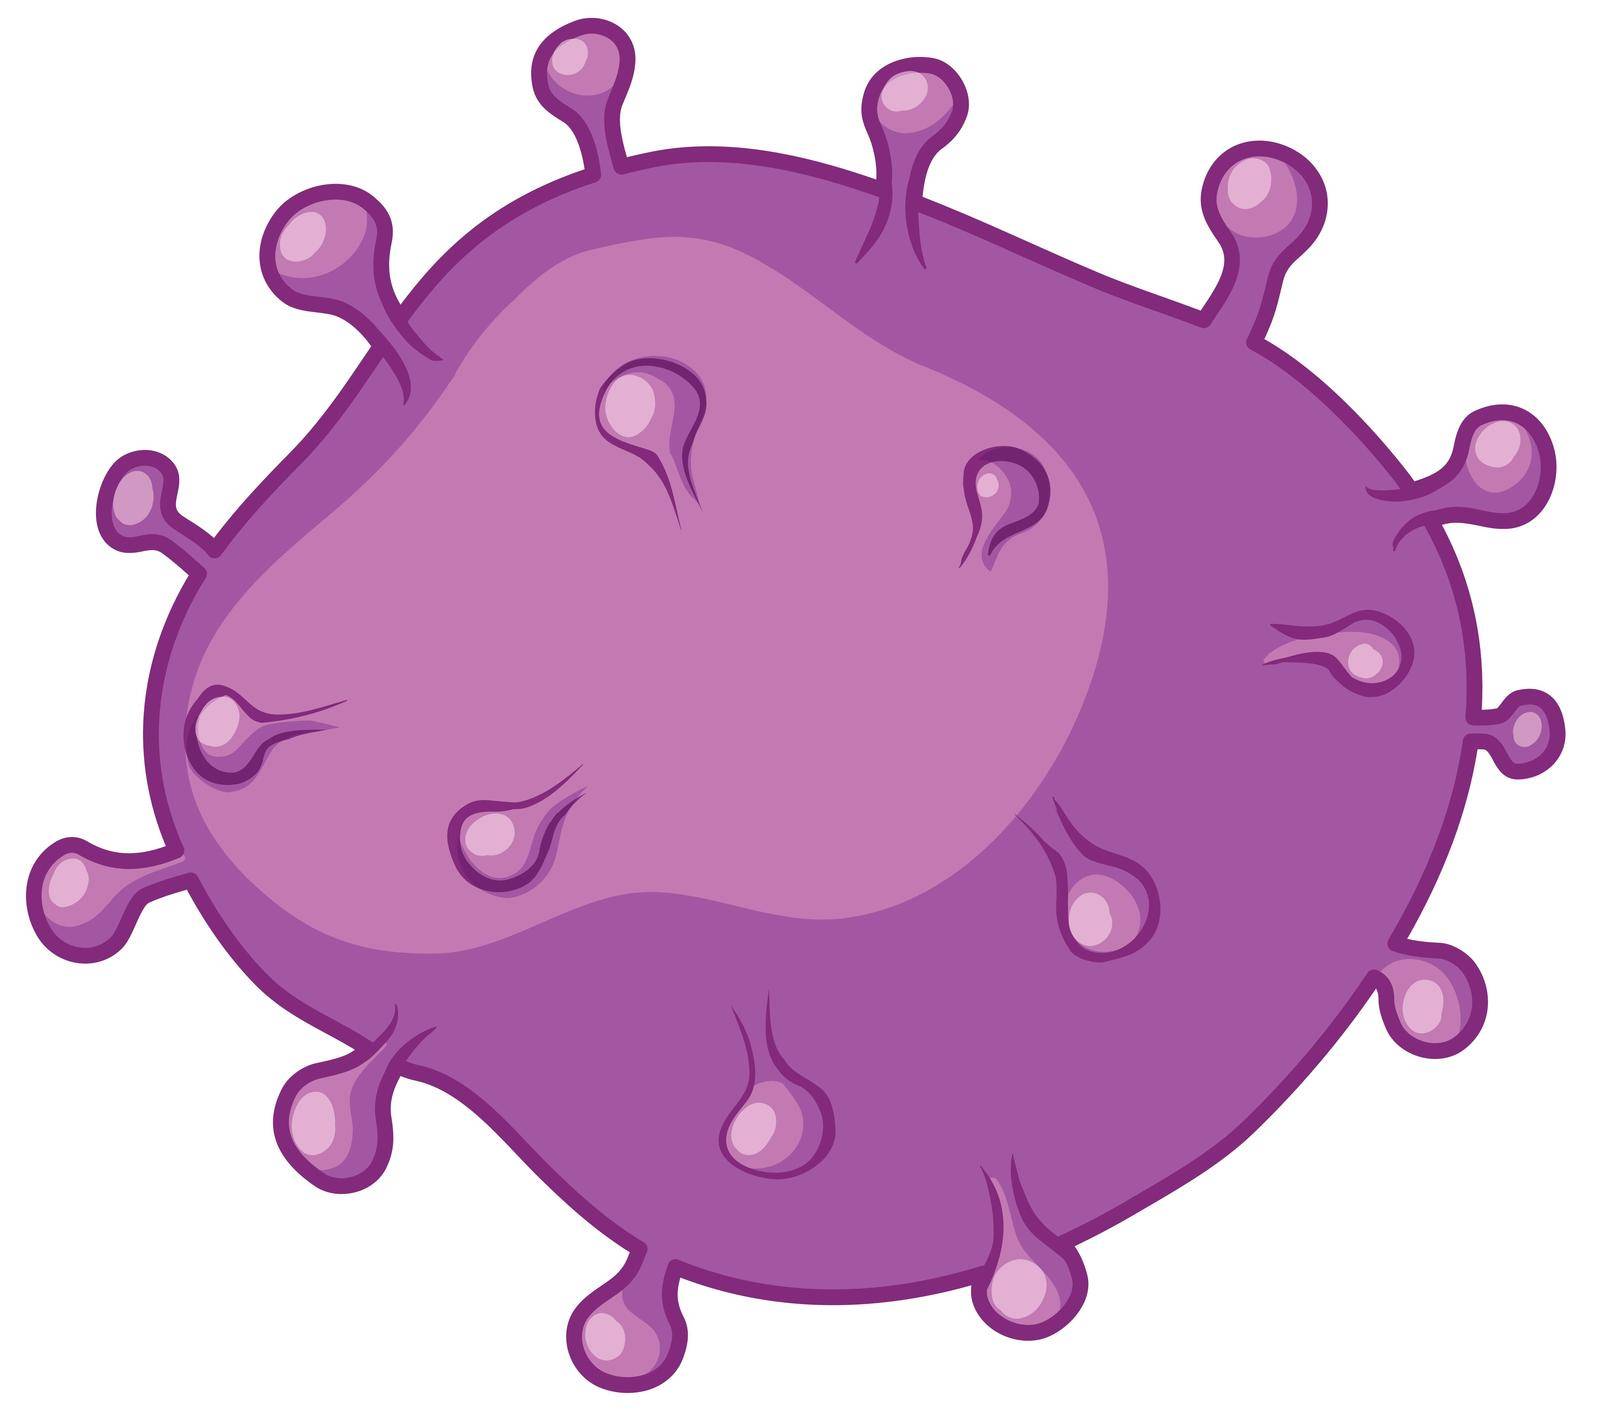 Purple bacteria on white illustration